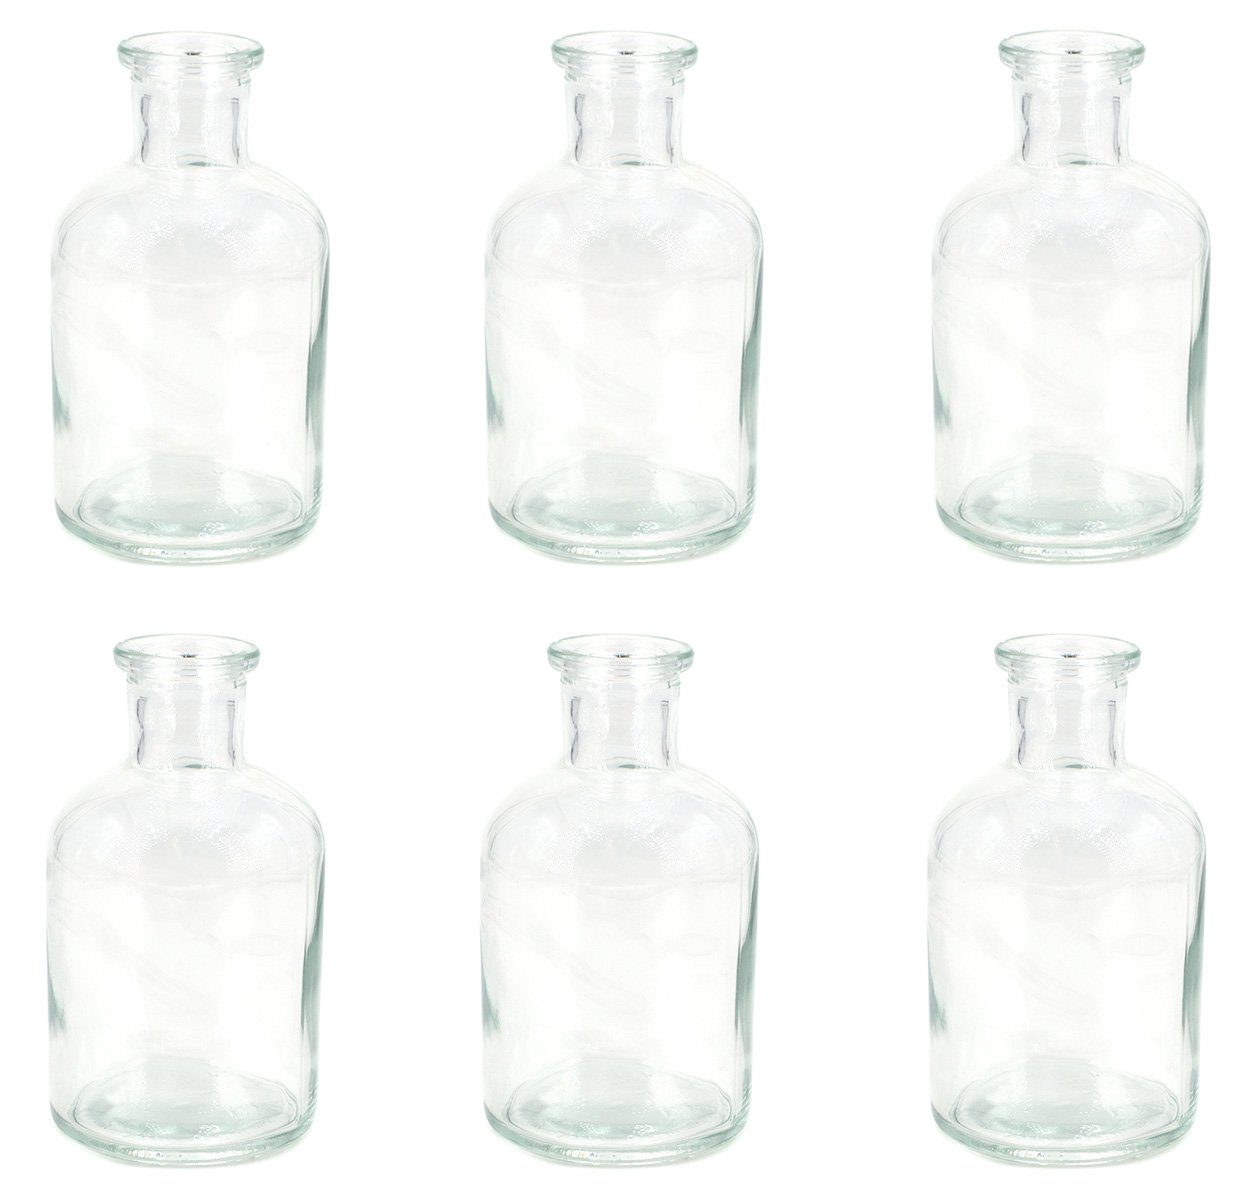 Creativery Dekovase, Vasen Glas 10cm klar transparent 125ml, 6er Set